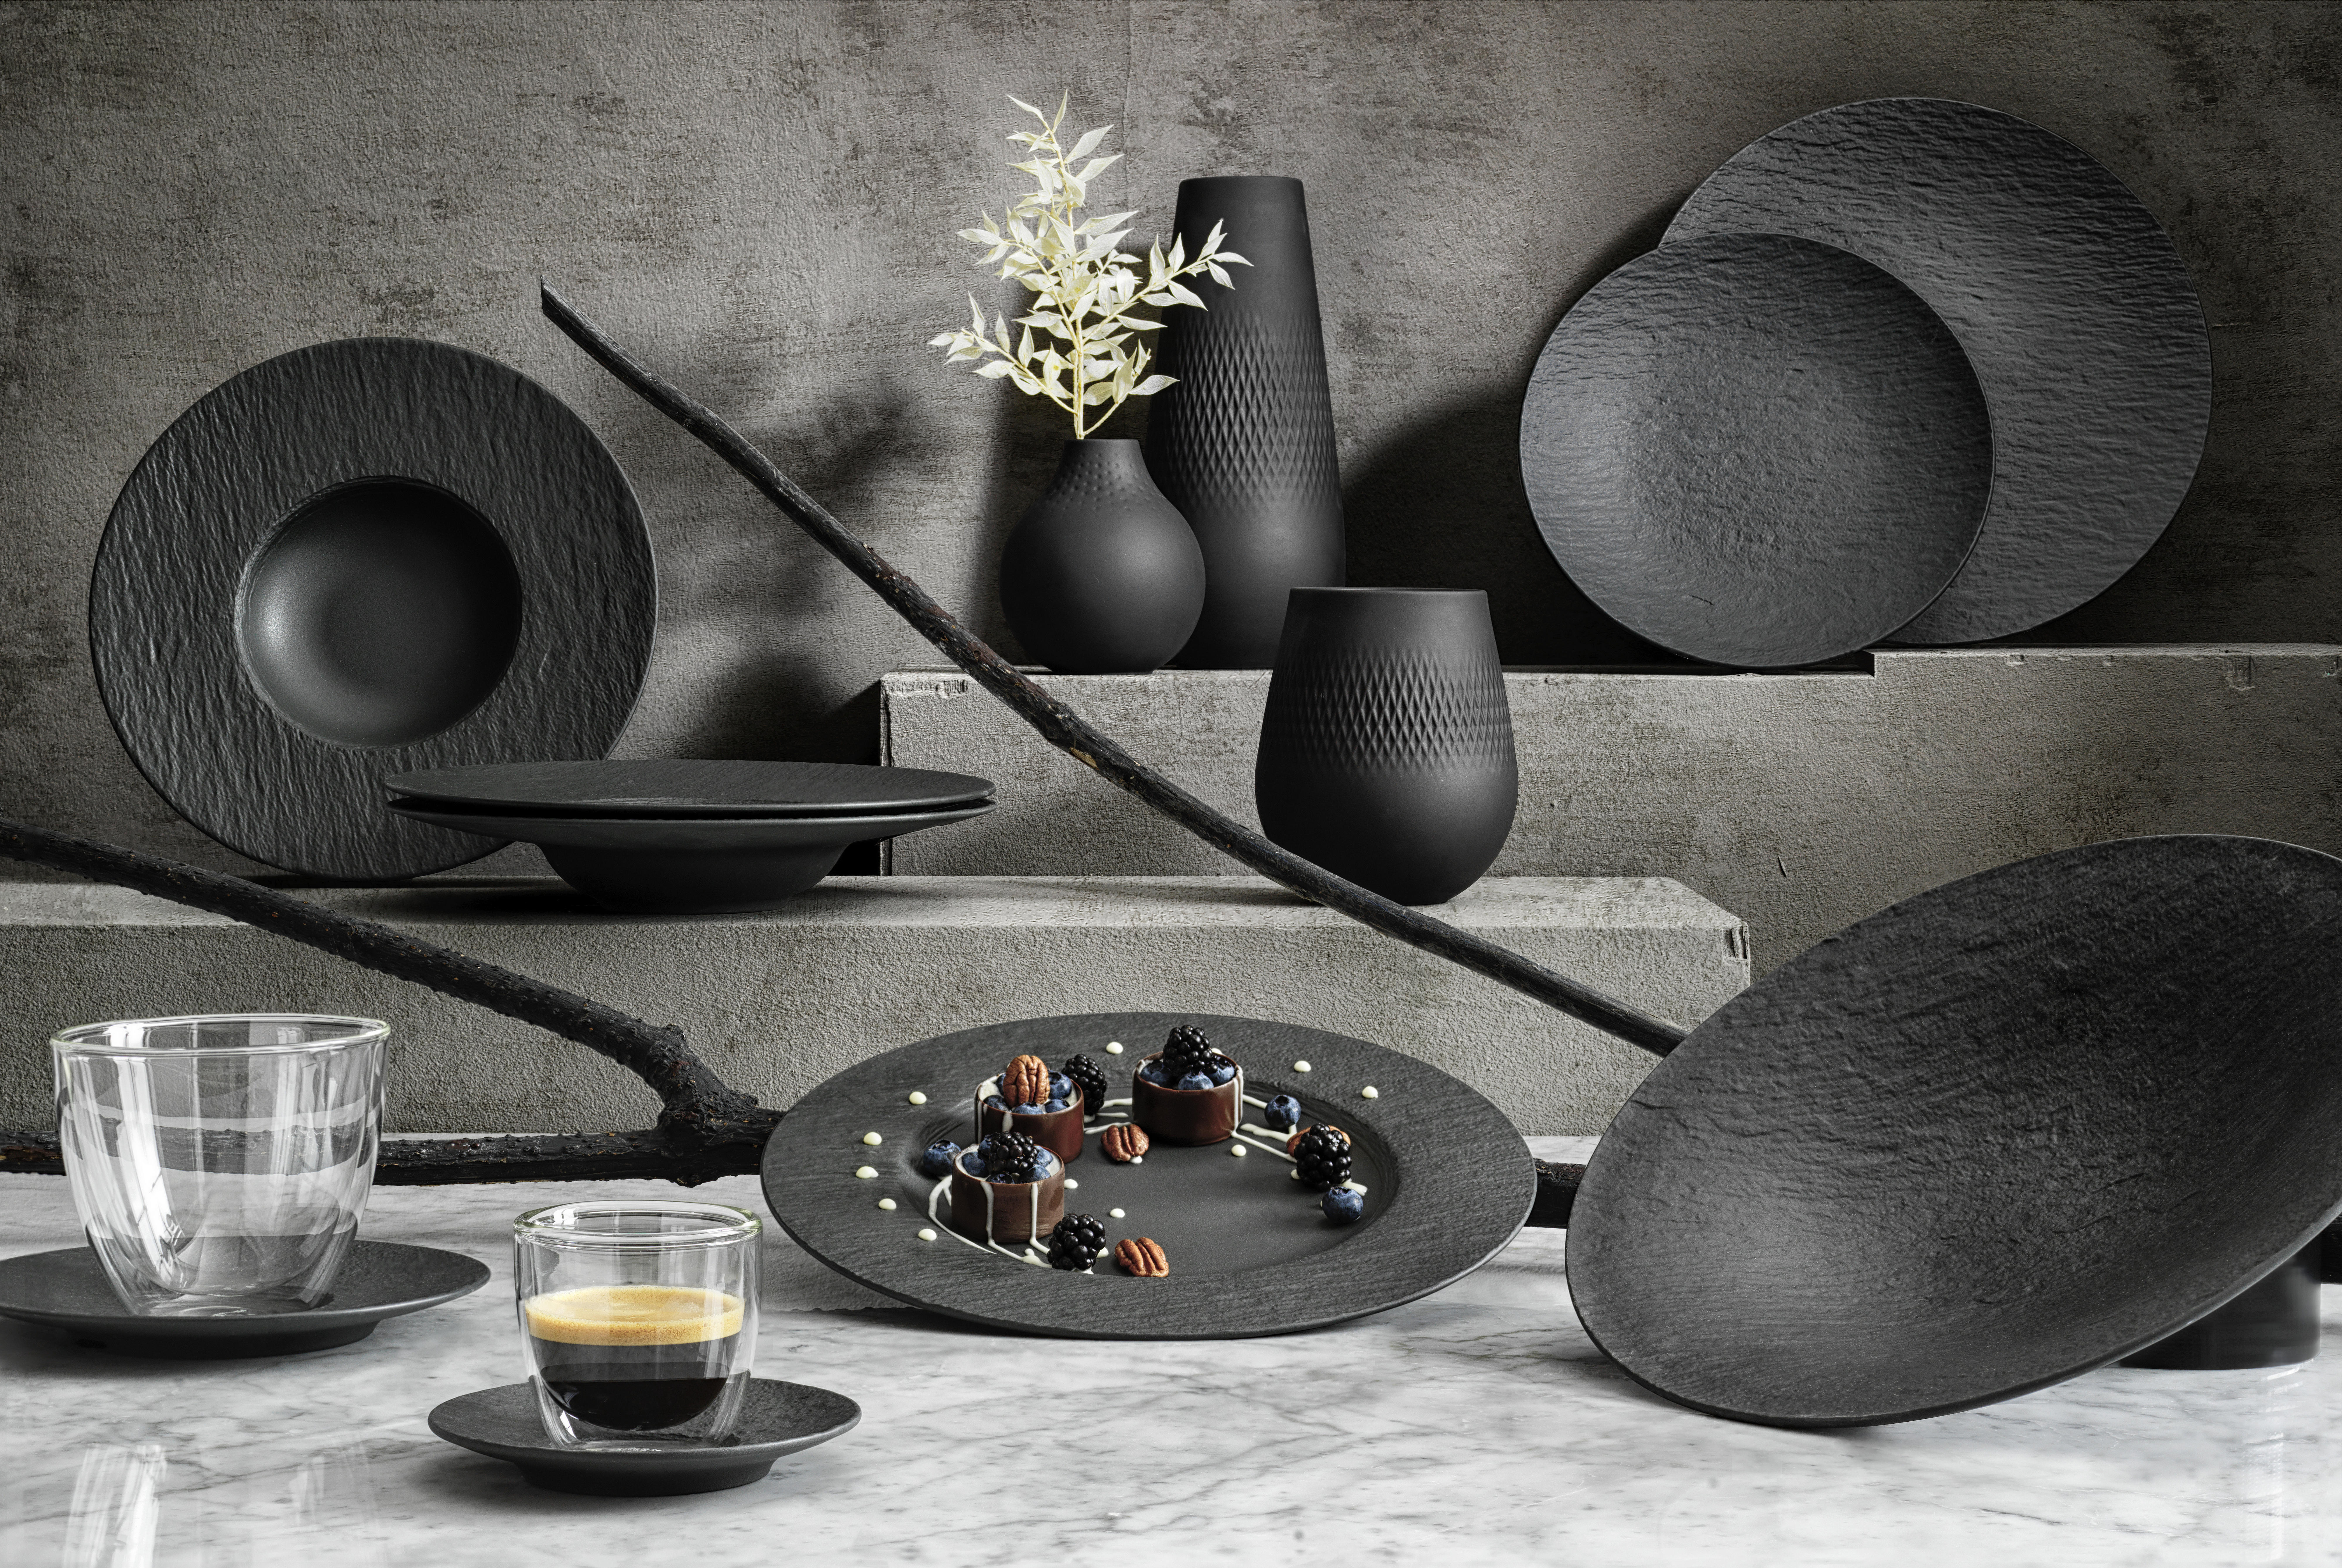 MATTALLRIK   - svart, Design, keramik (27cm) - Villeroy & Boch